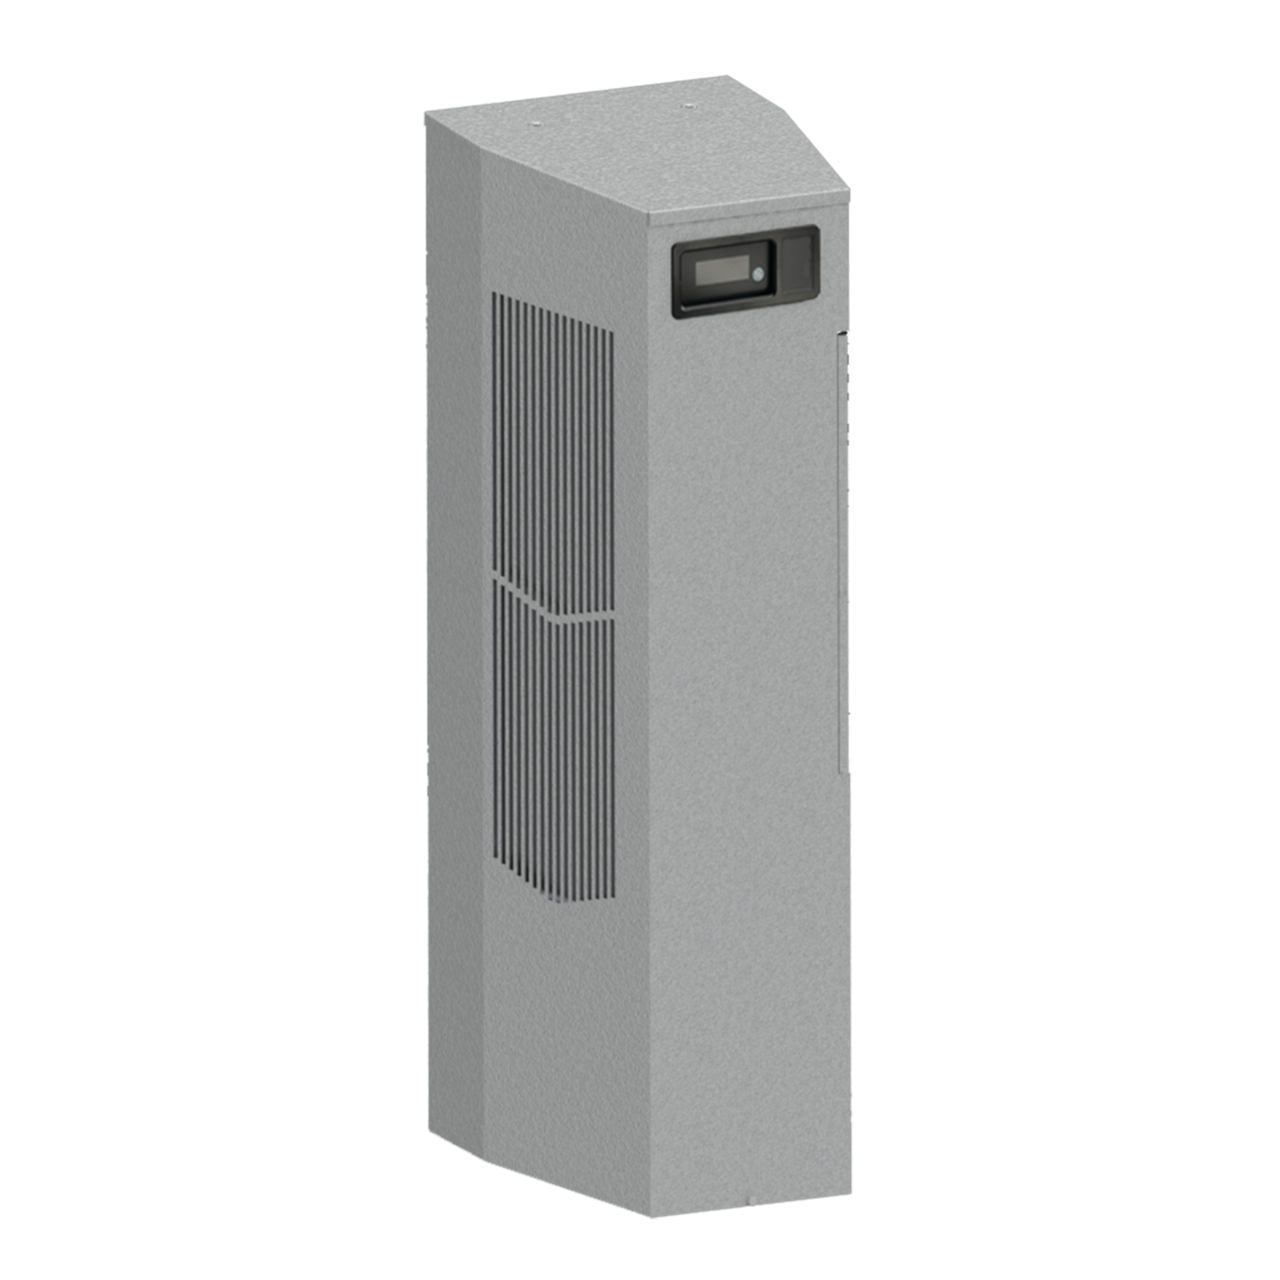 nVent HOFFMAN Spectracool™ N360816G060 MCL Indoor/Outdoor Enclosure Air Conditioner, 115 VAC, 11.6/13.3 A, 50/60 Hz, NEMA 3R/4/12 Enclosure, 7800 Btu/hr